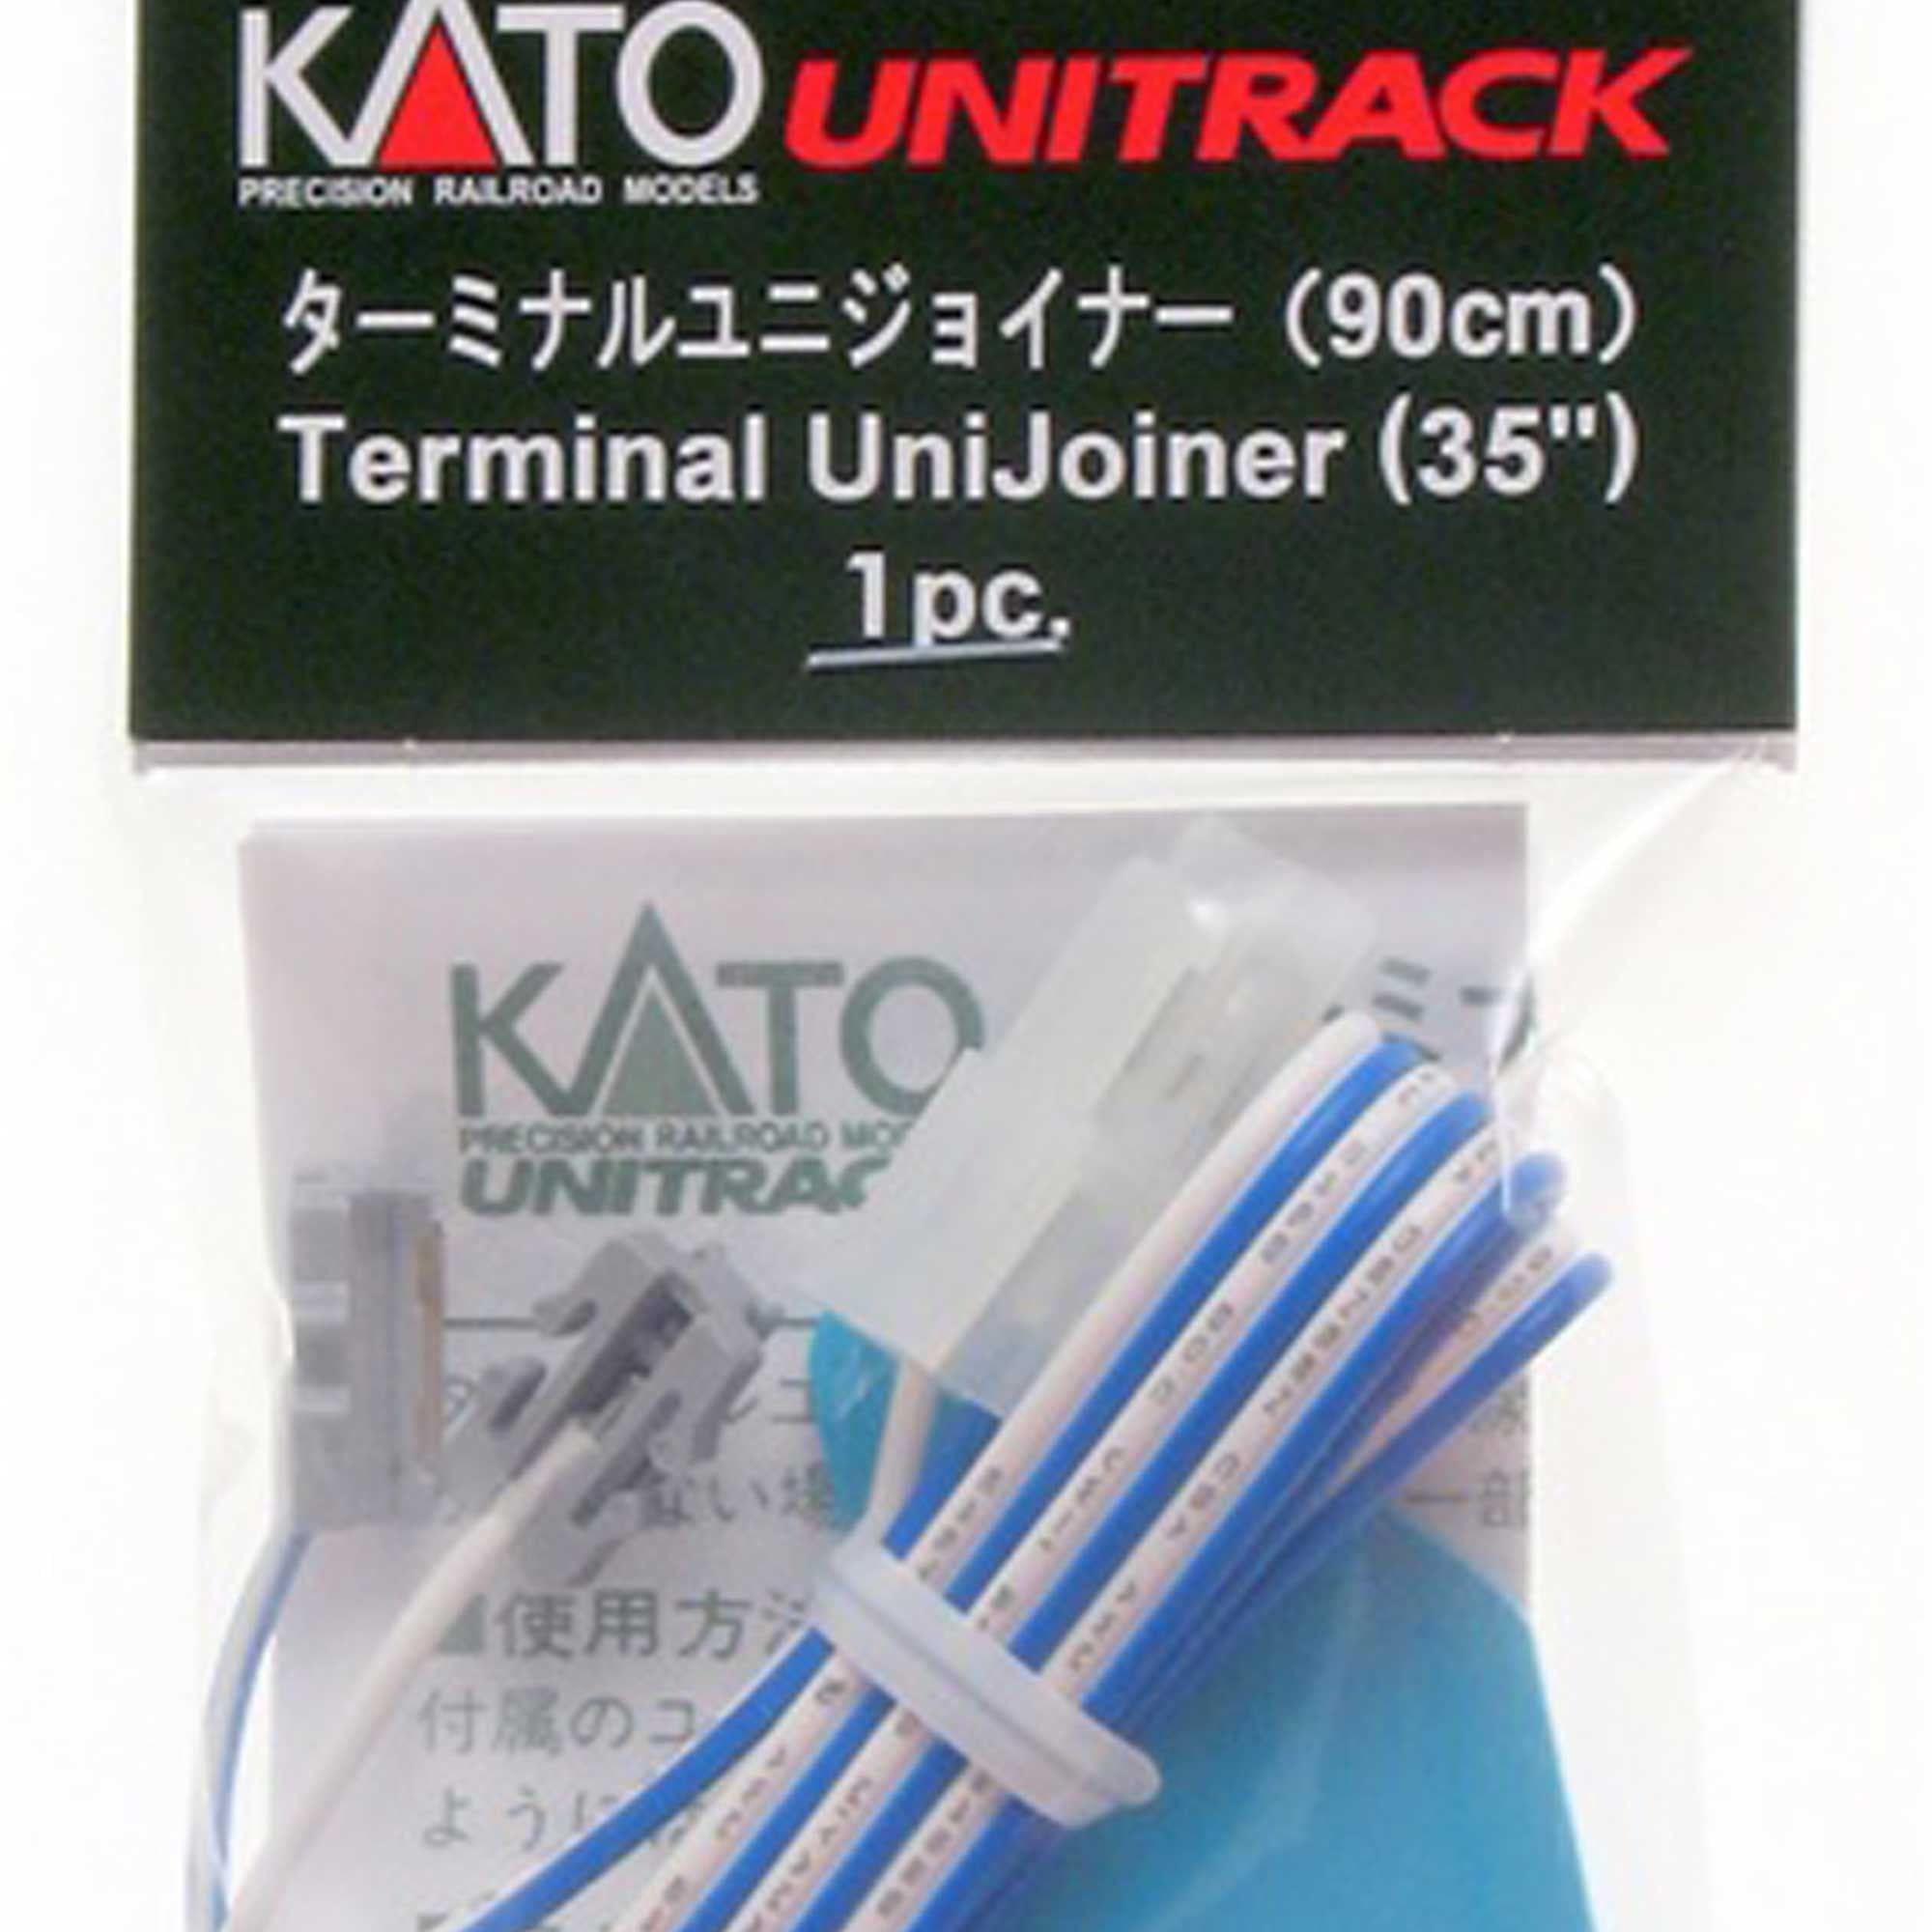 1 pair Terminal UniJoiner Kato 24-818 - N Scale 35" Leads 